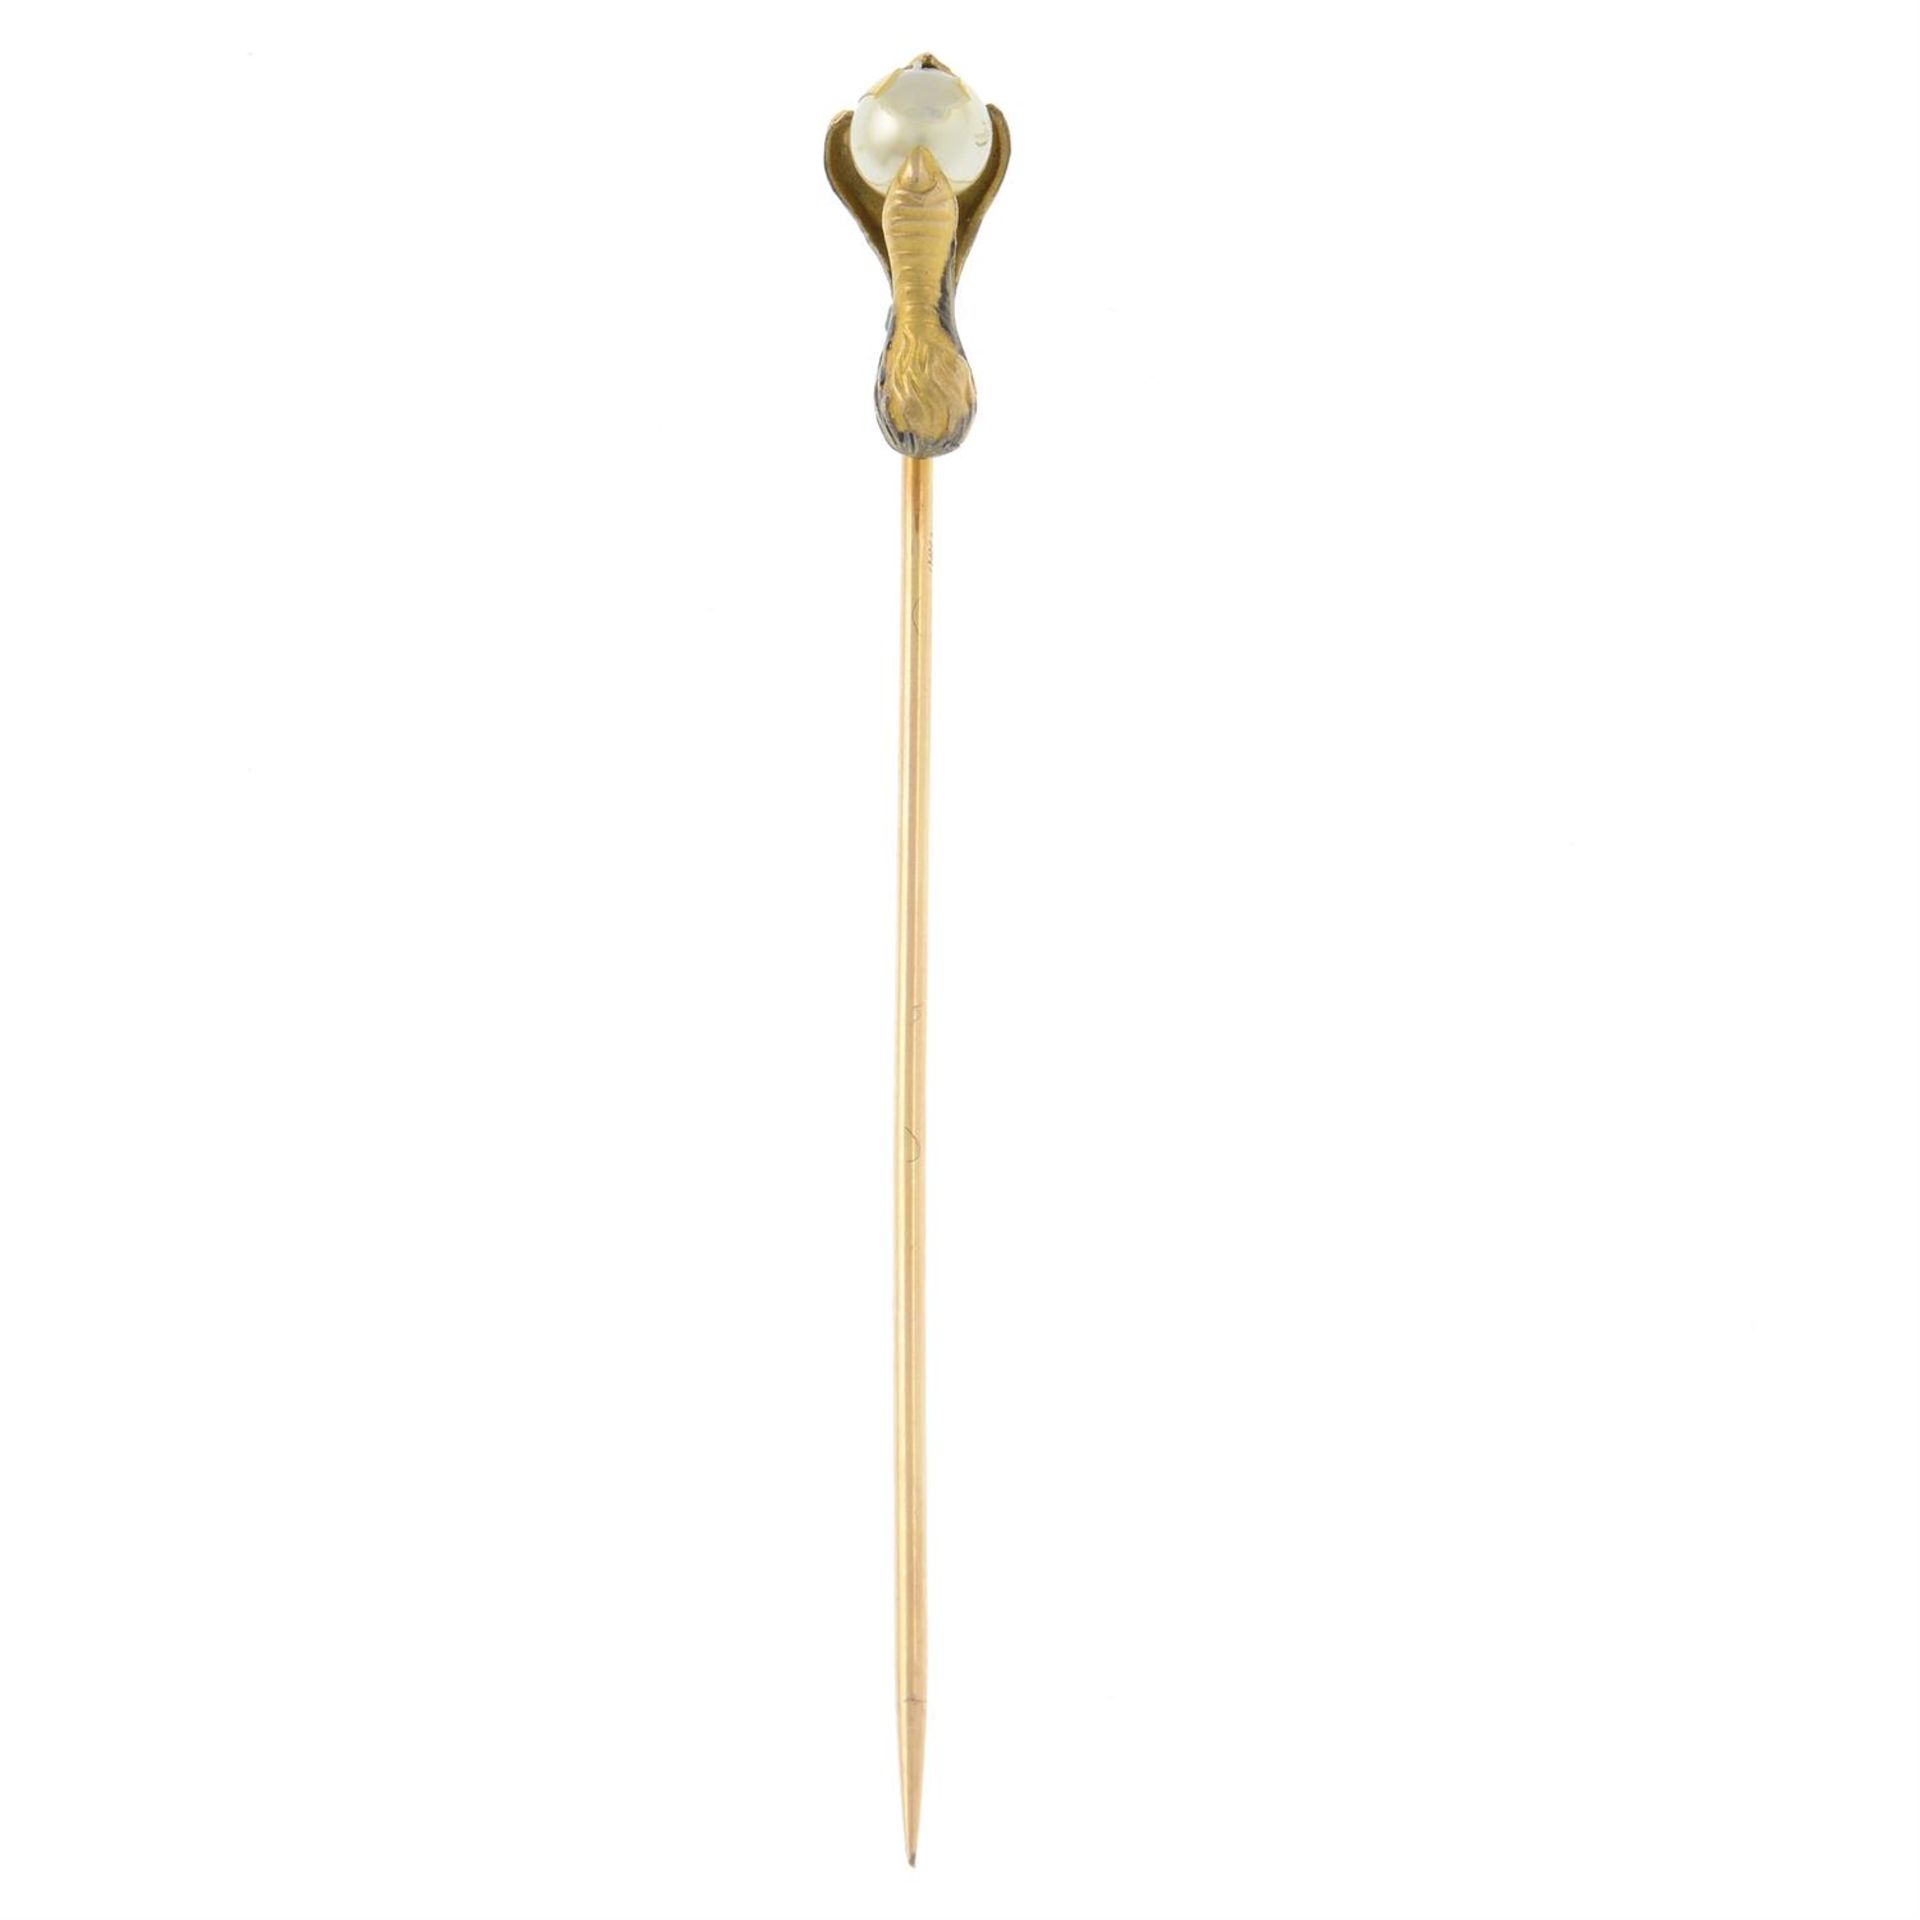 An early 20th century imitation pearl bird claw stickpin.